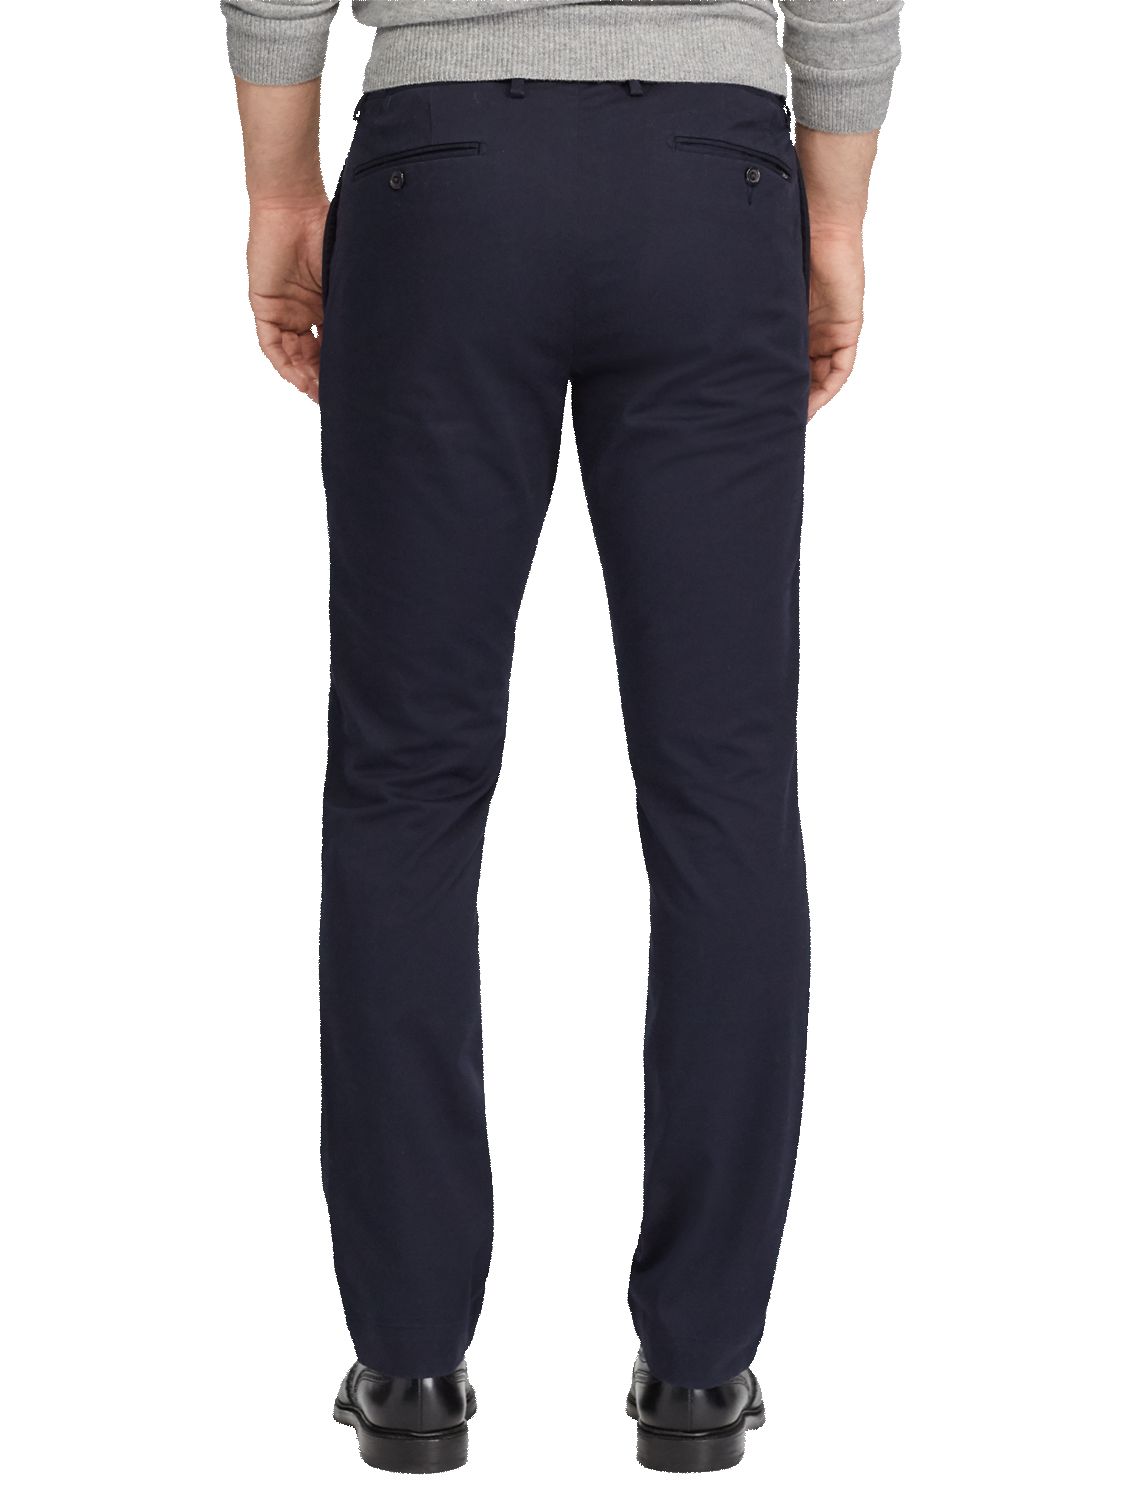 Polo Ralph Lauren Flat Pant Trousers, Aviator Navy at John Lewis & Partners